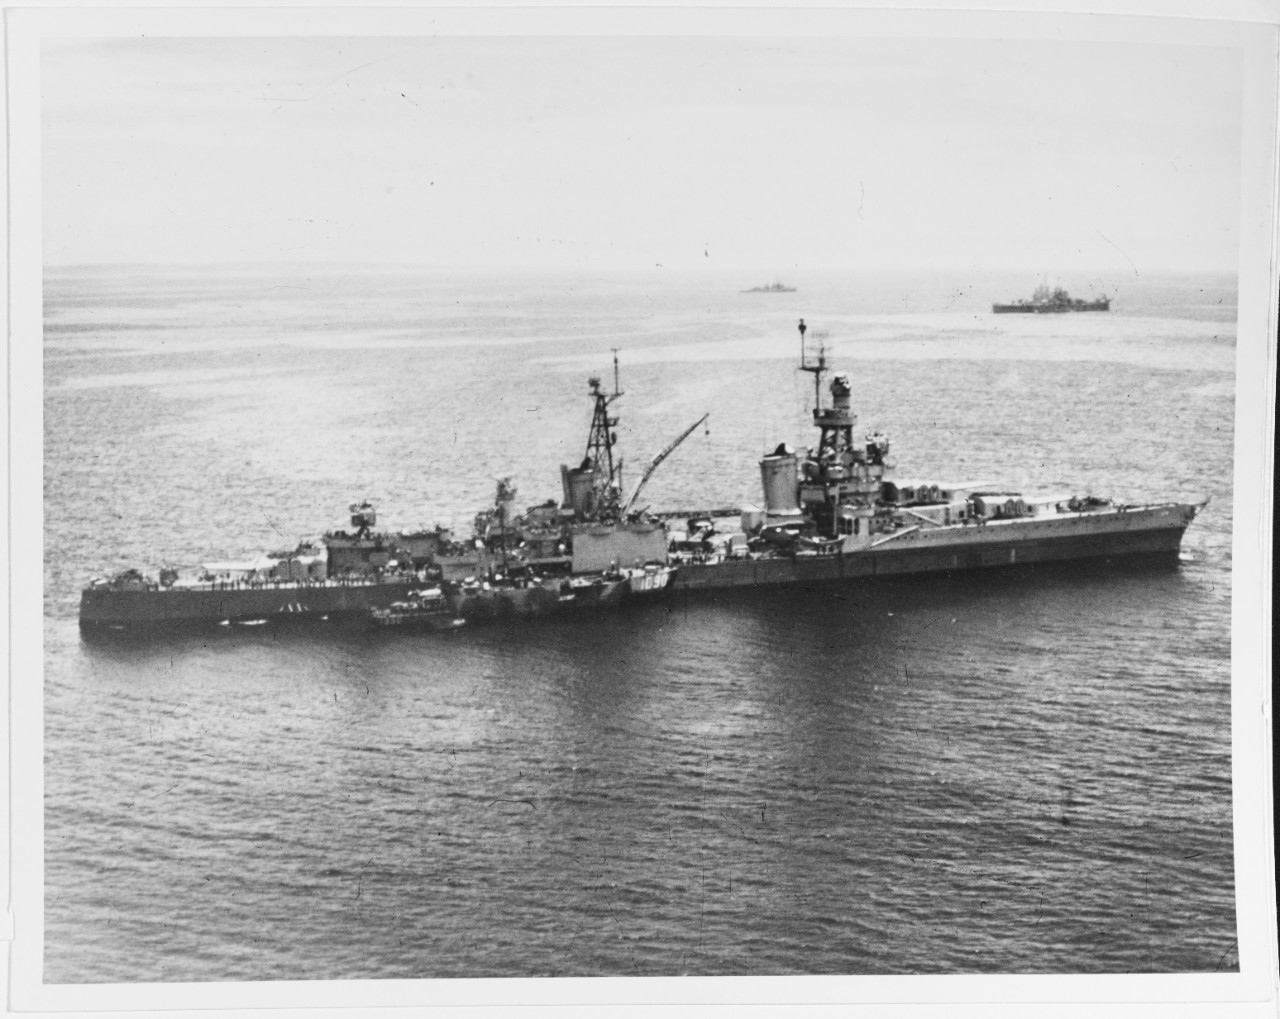 USS LOUISVILLE (CA-28) off the Southern coast of Okinawa, 30 May 1945